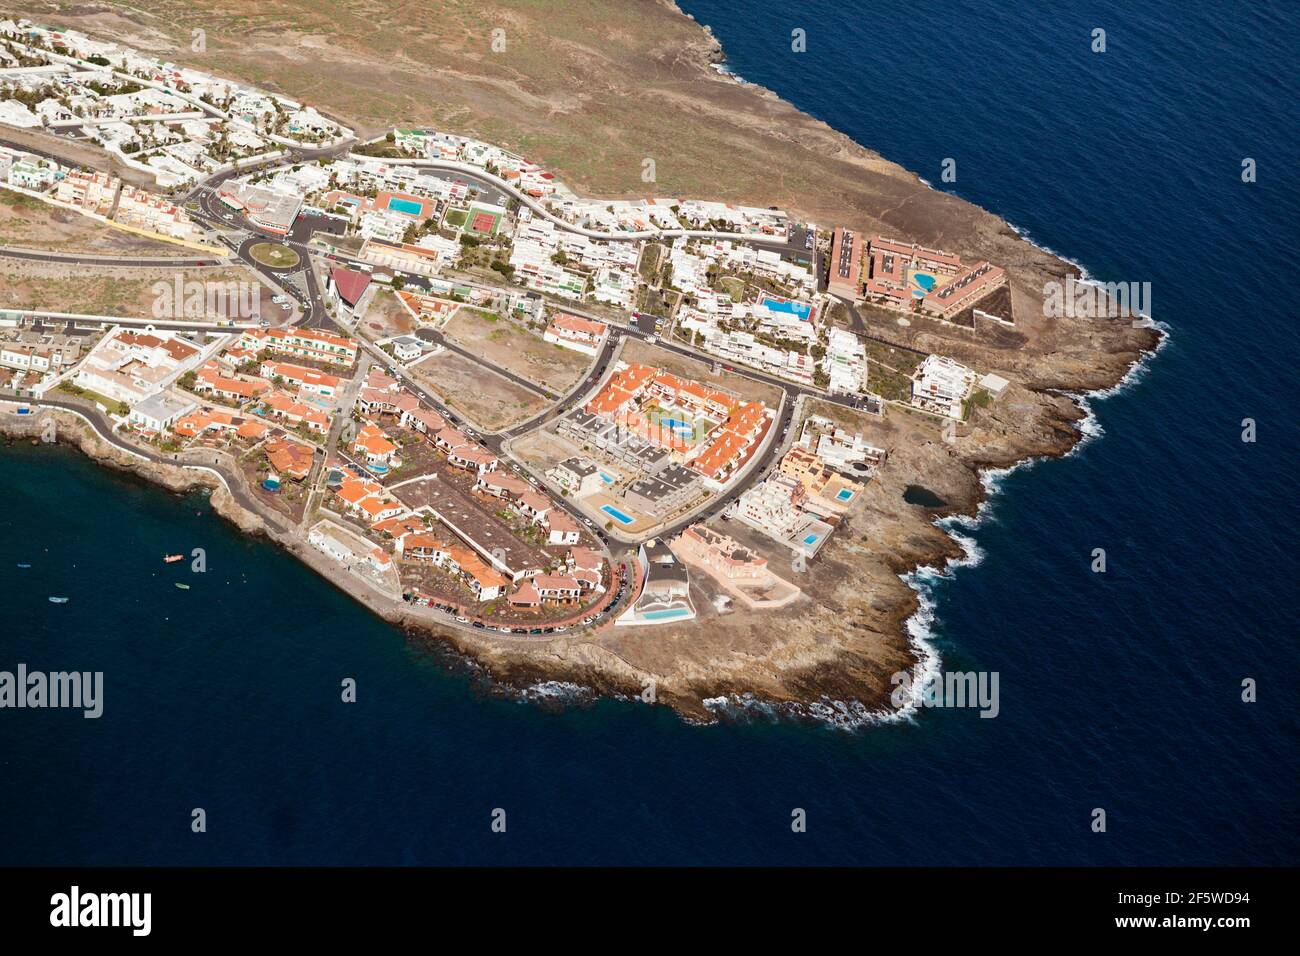 Aerial view of El Poris de Abona, Tenerife, Spain Stock Photo